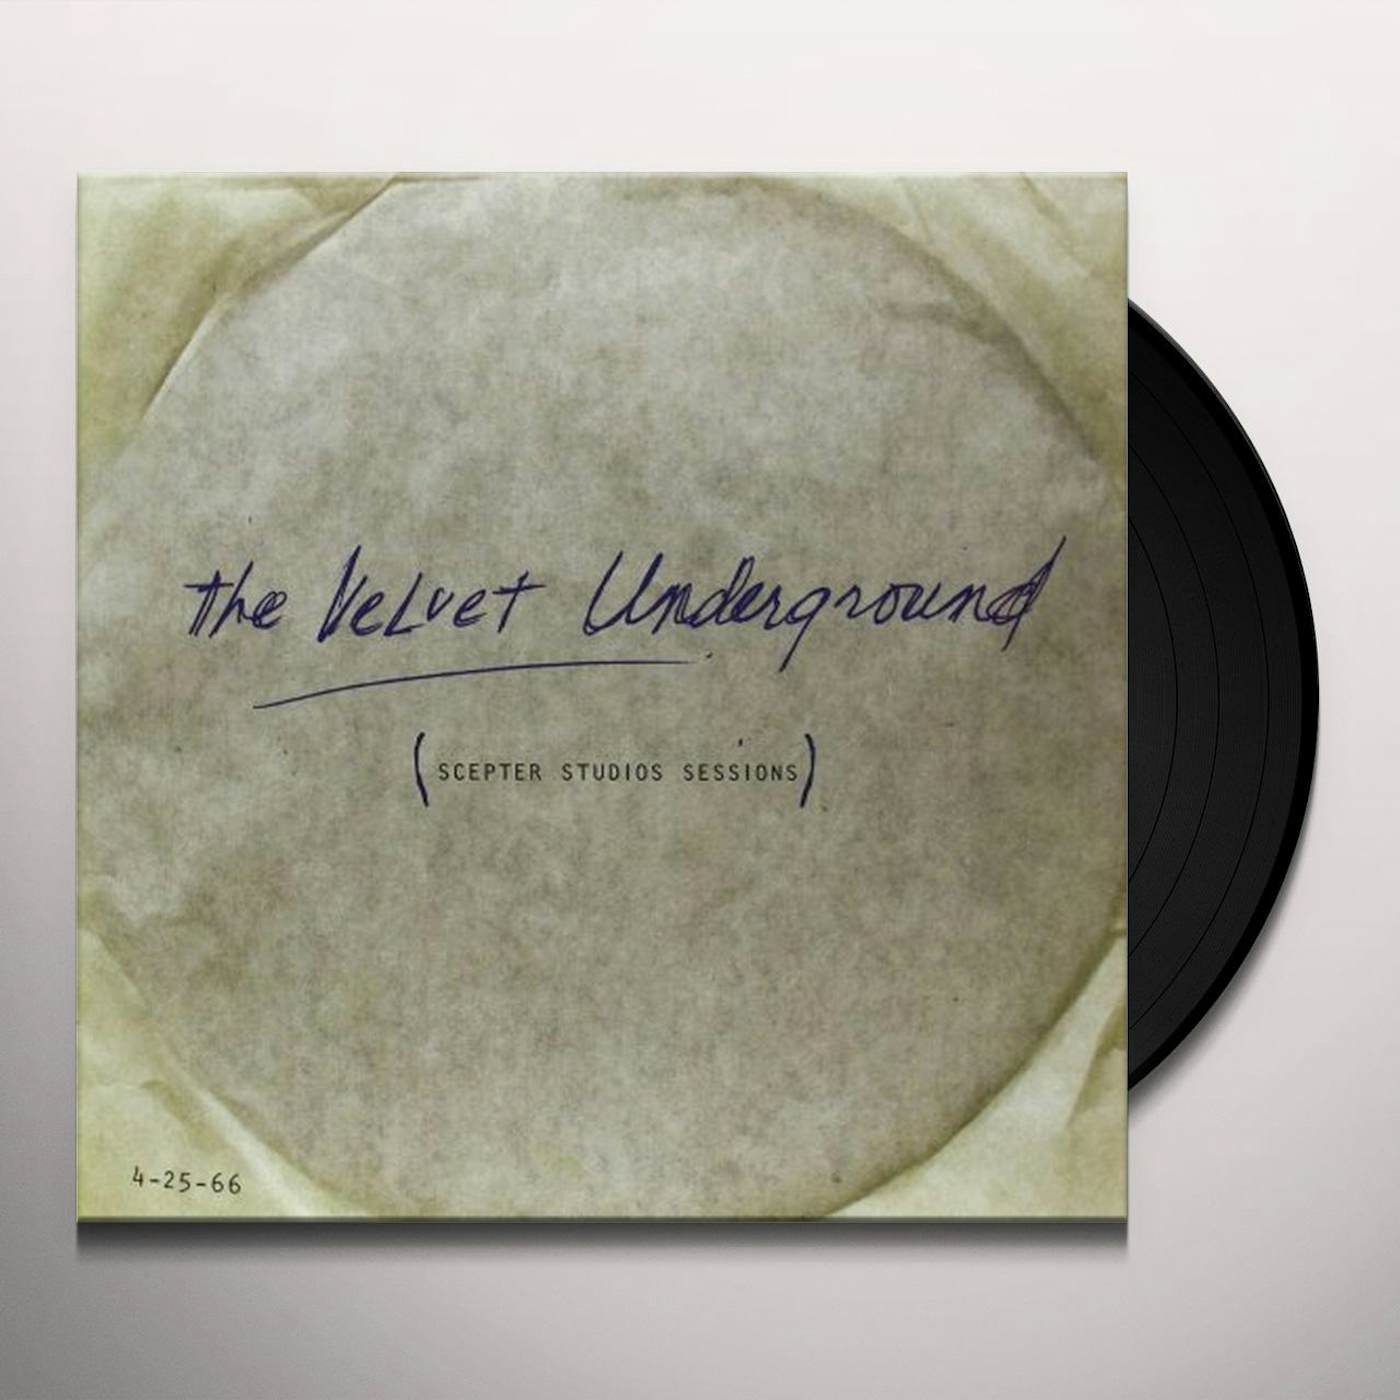 The Velvet Underground SCEPTER STUDIOS ACETATE Vinyl Record